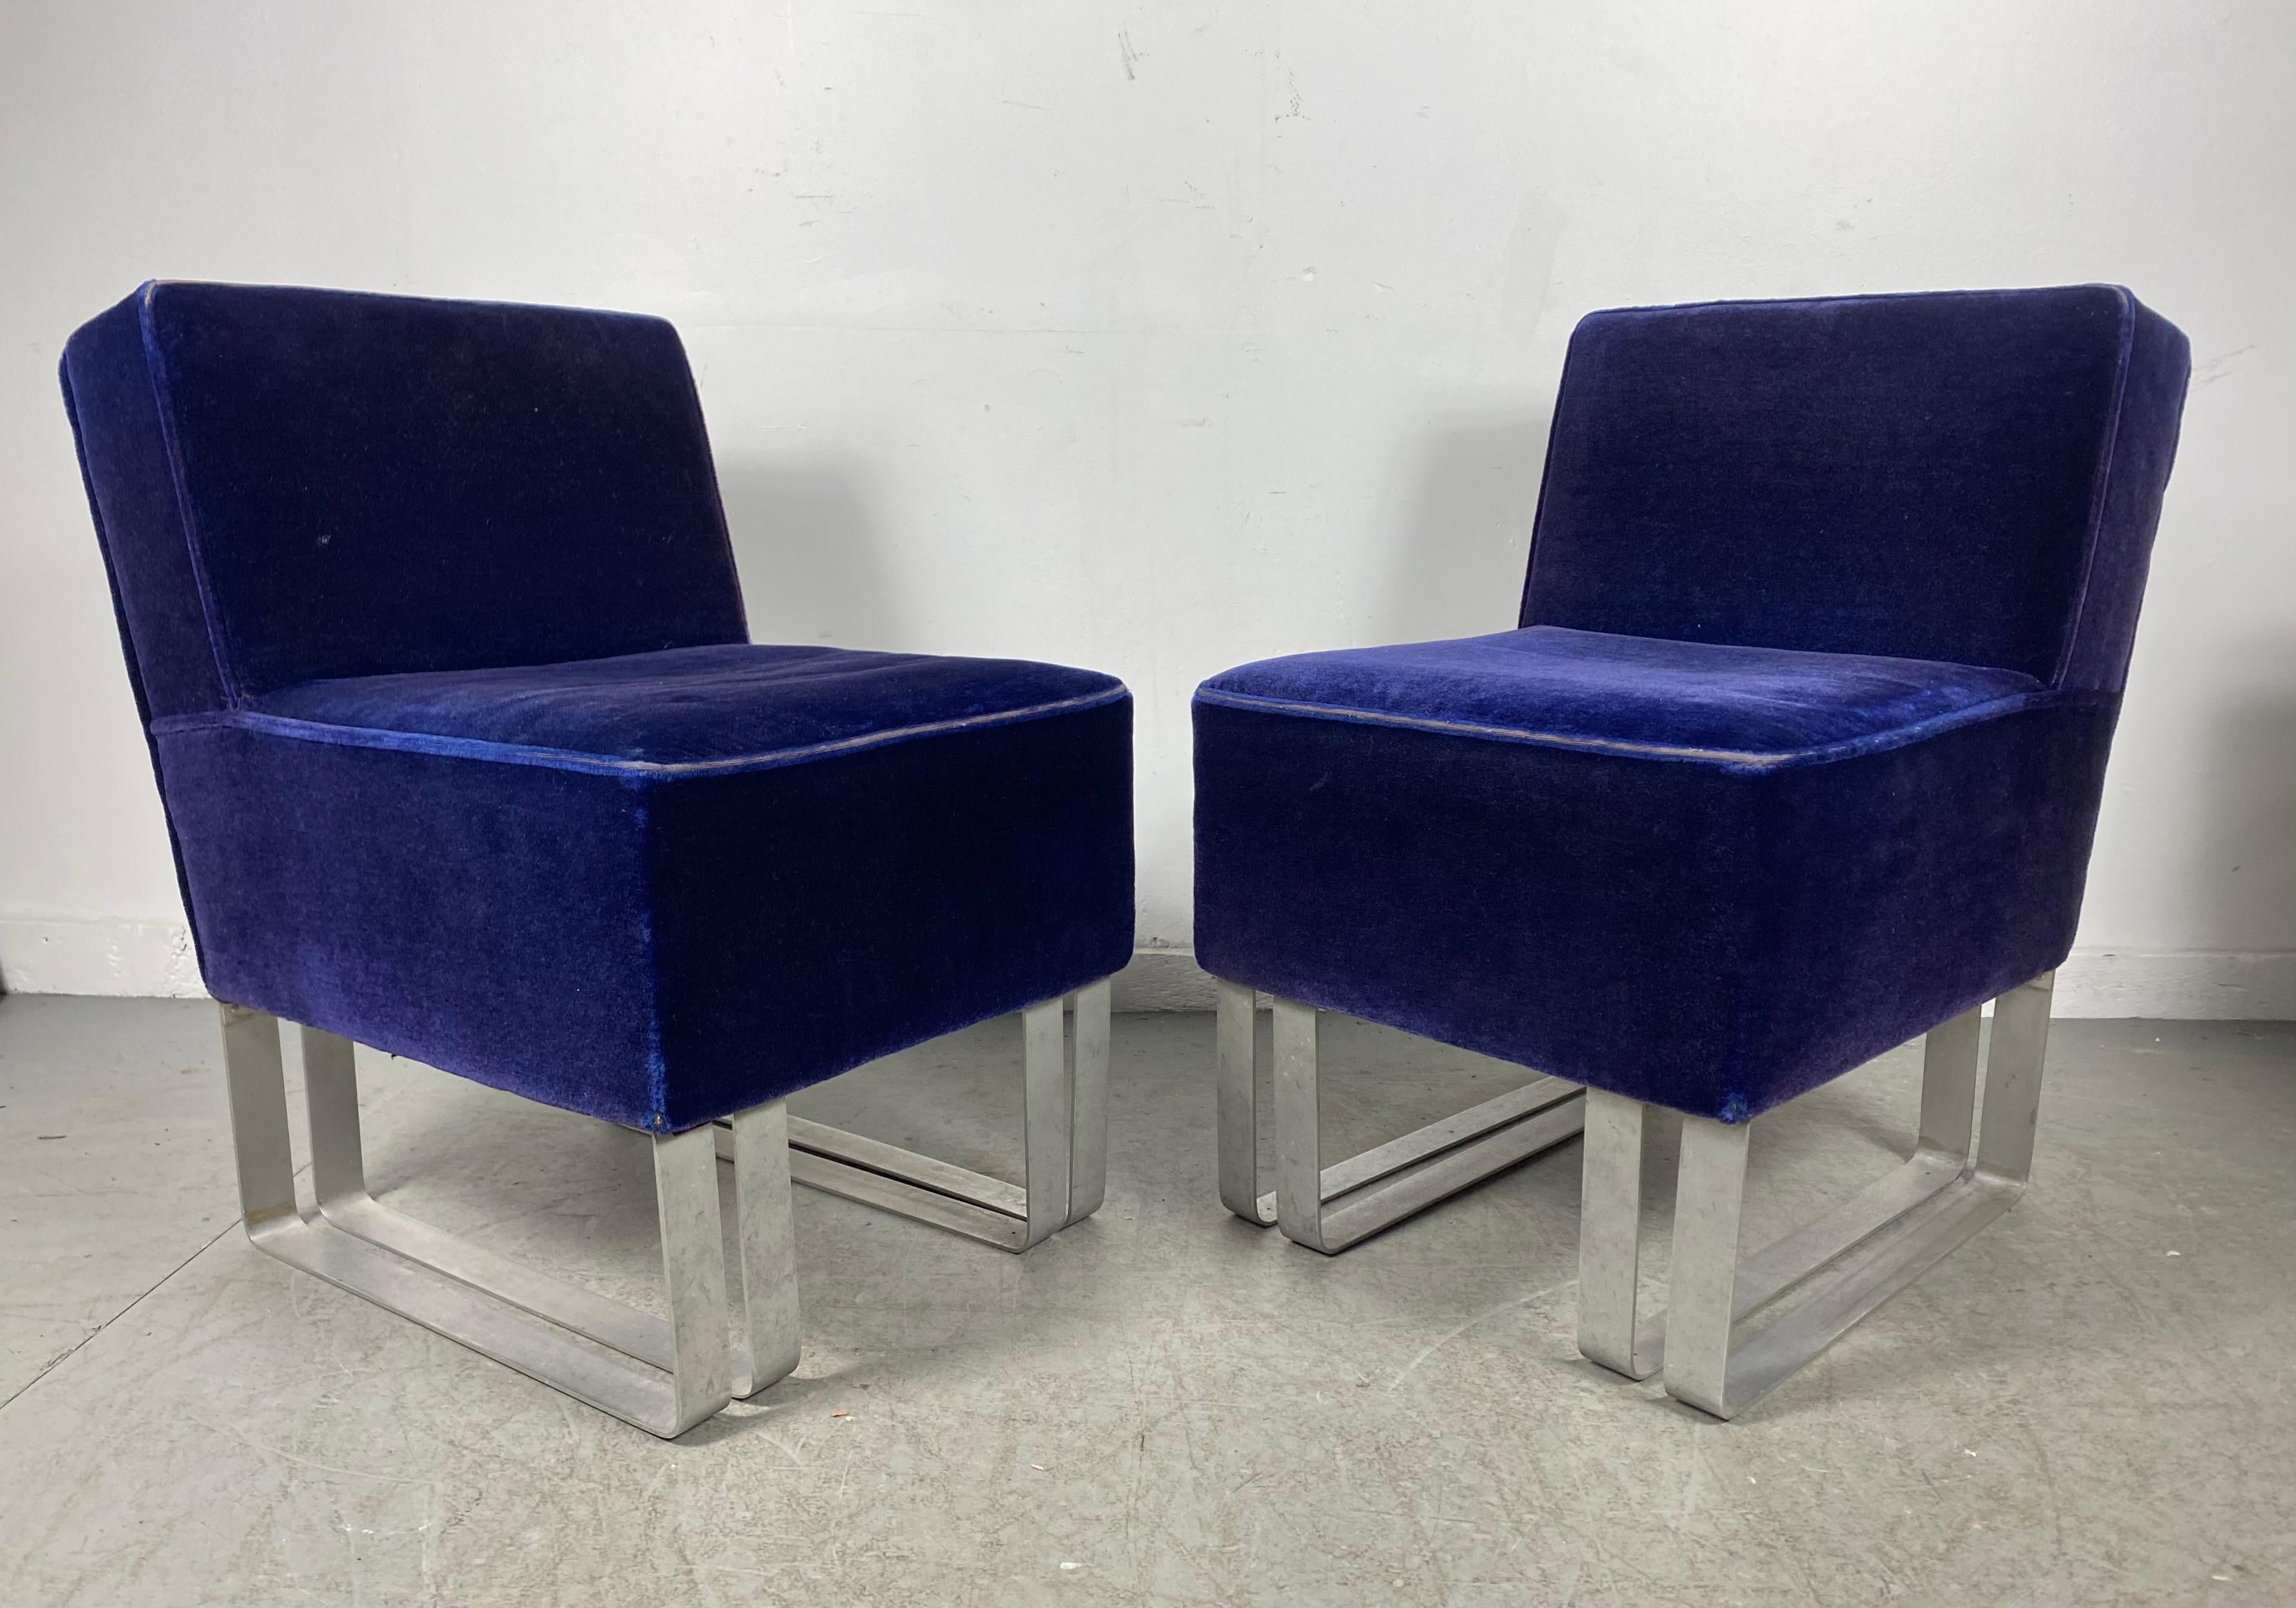 American Rare Modernist Slipper Chairs by Donald Deskey for Deskey -Vollmer For Sale